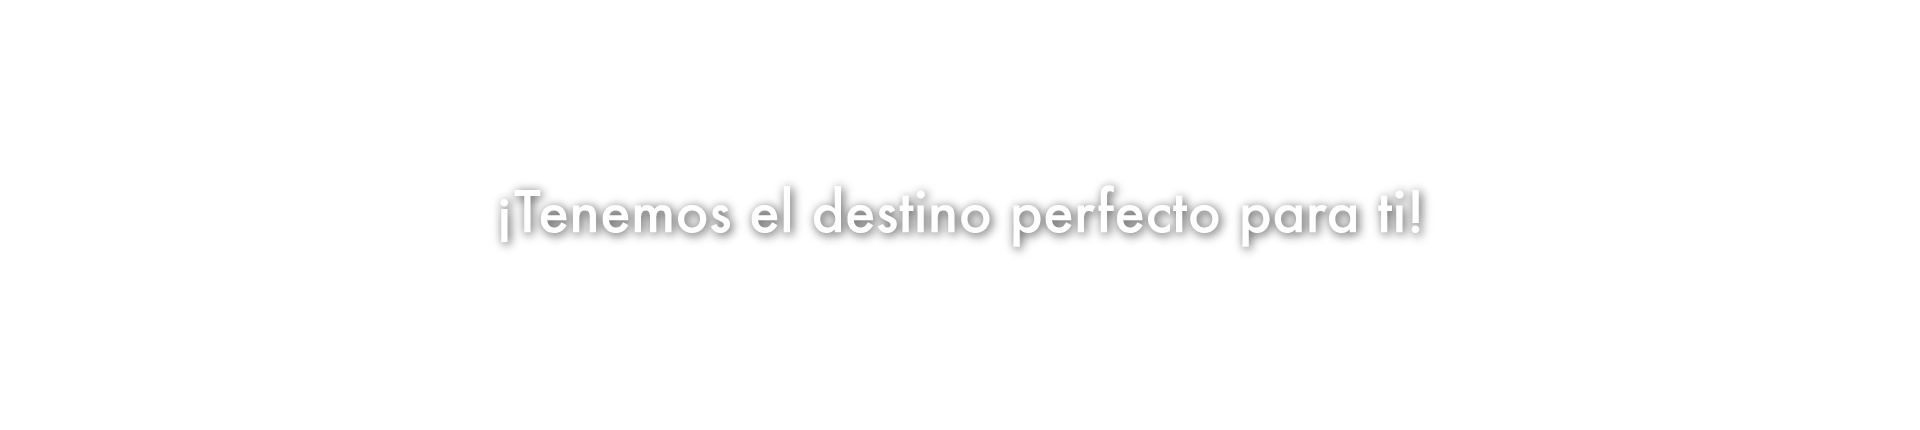 Banner-Destino-1